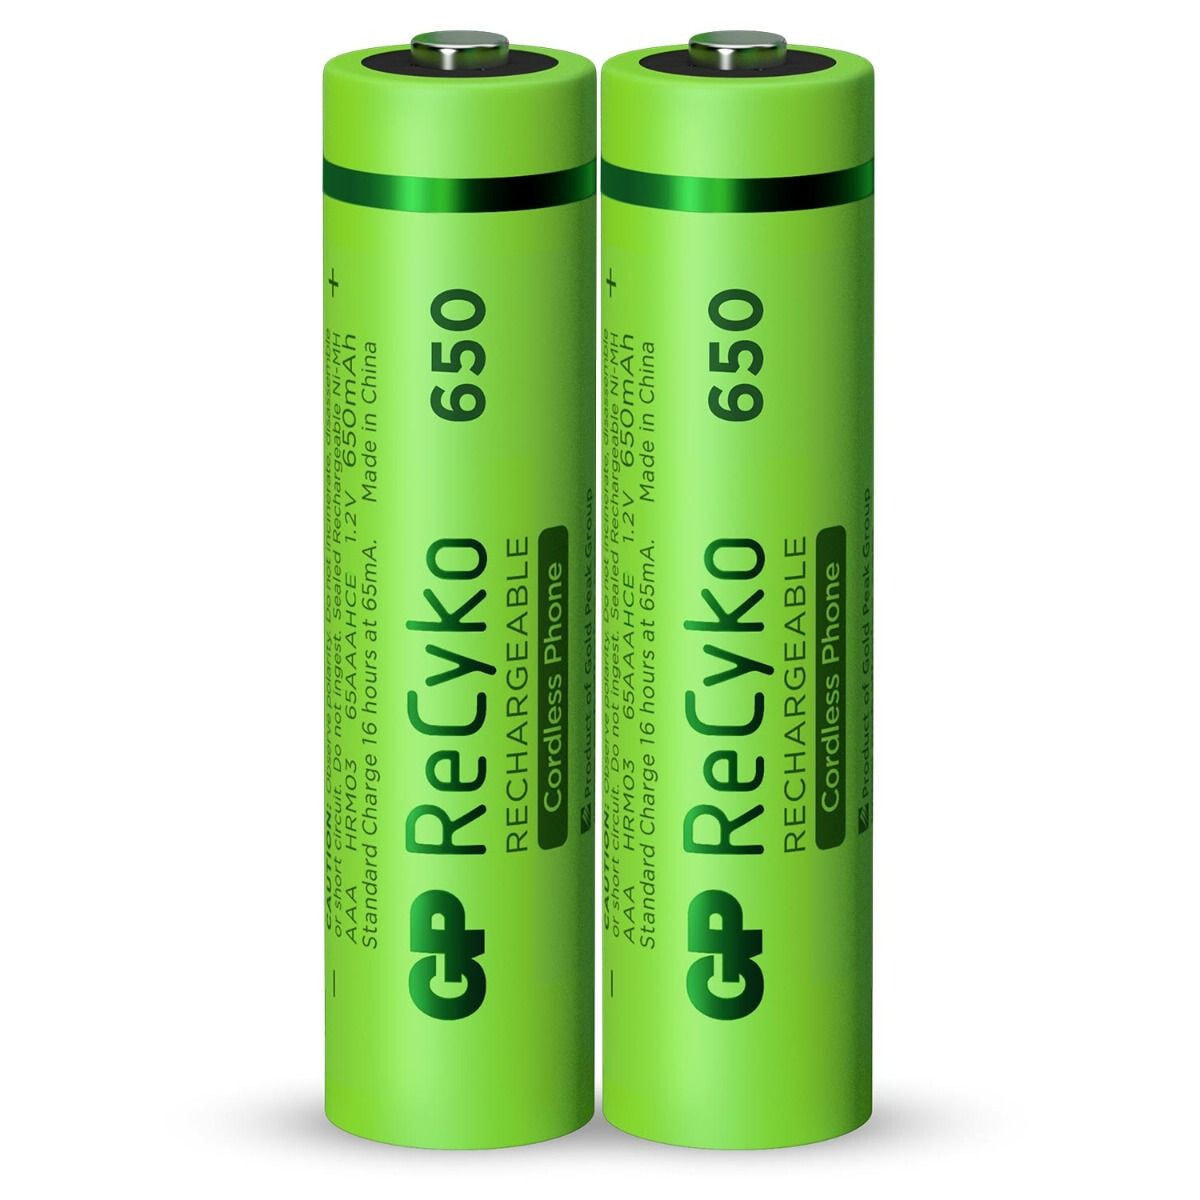 Gp batteries. GP 550 Rechargeable NIMH. Никель-металл-гидридный аккумулятор. AAA Battery. Батарейки GP для тонометров.